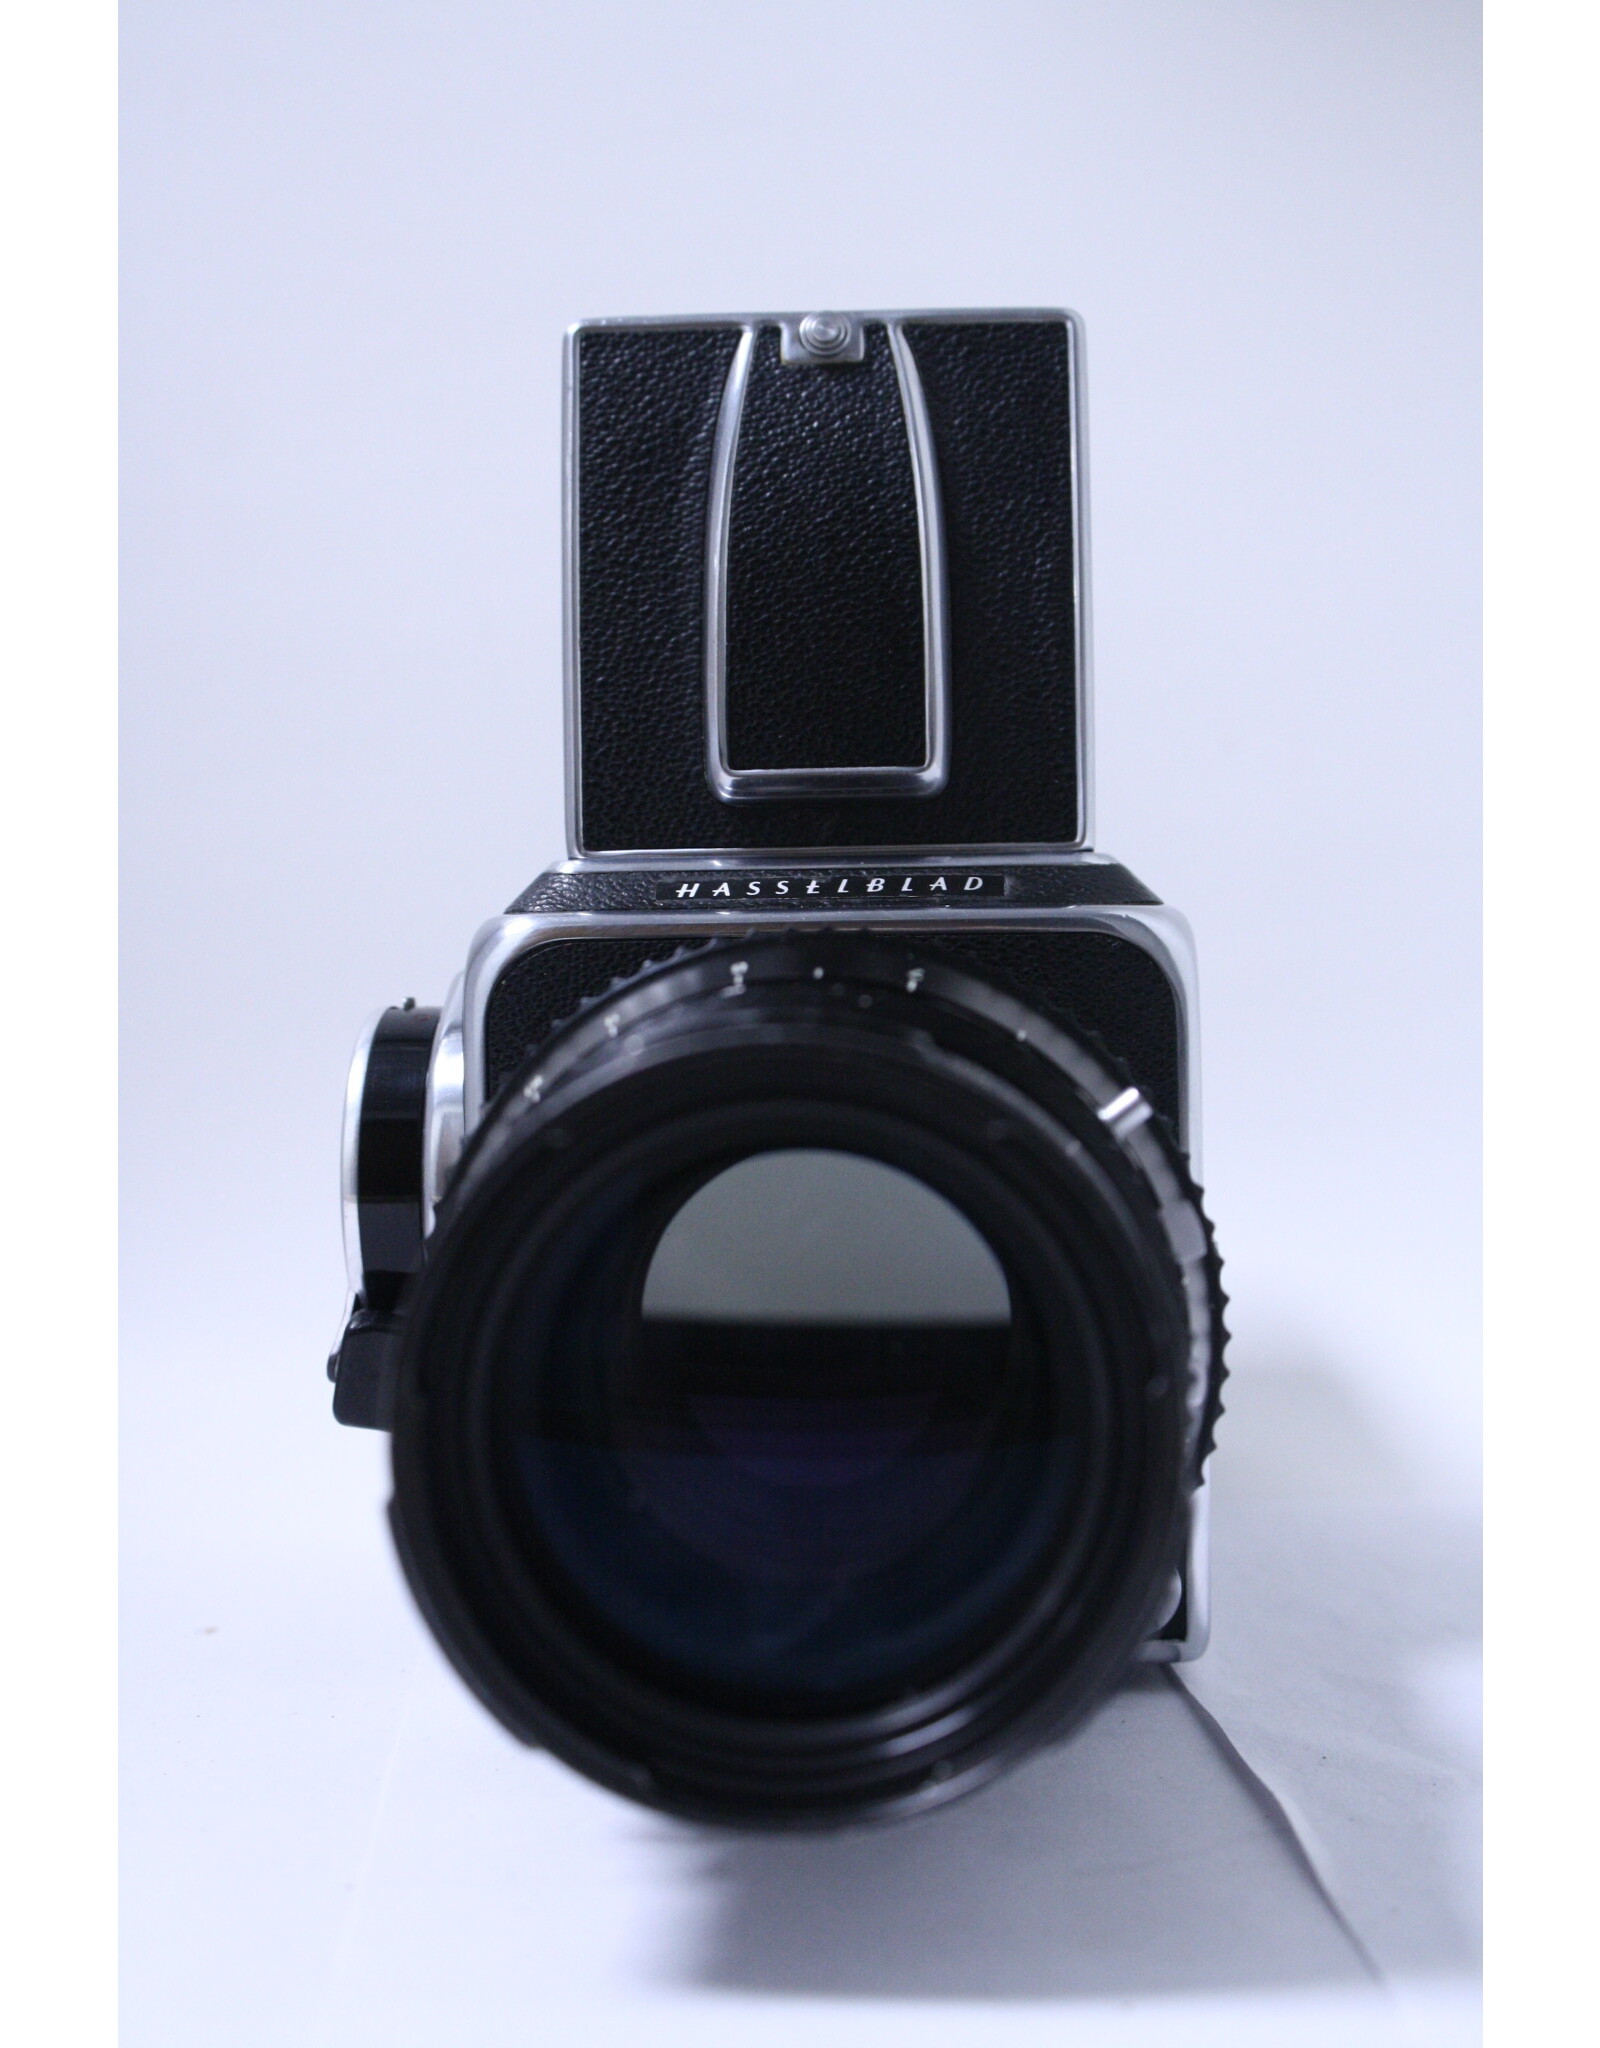 Hasselblad 500C Medium Format Film Camera Body  with Carl Zeiss T* Sonnar CF 150mm F4 Lens